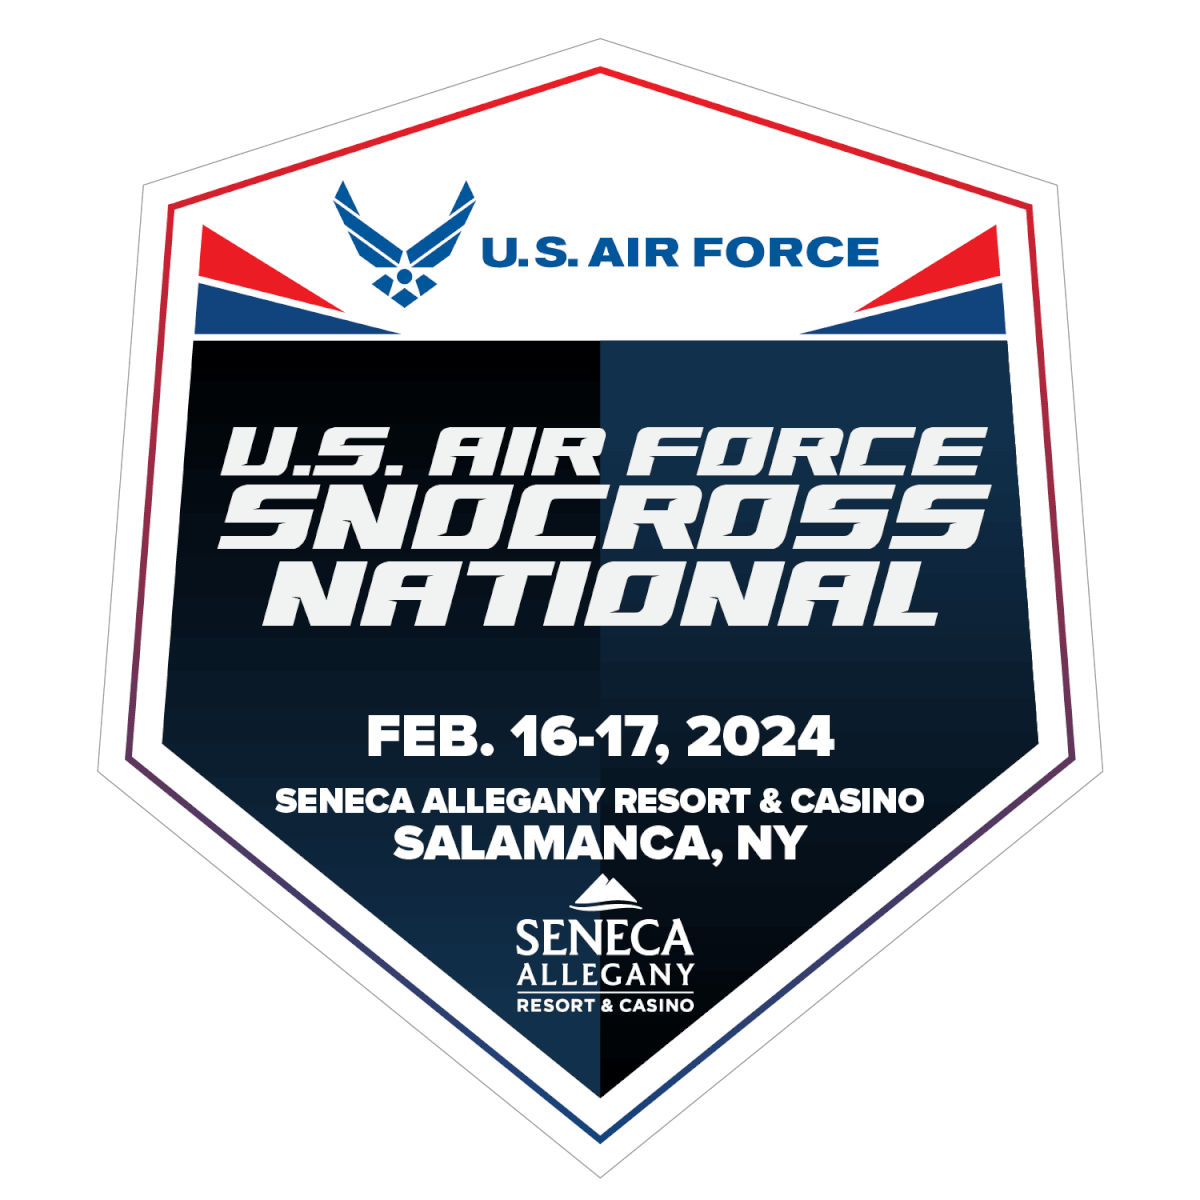 U.S. AIR FORCE SNOCROSS NATIONAL